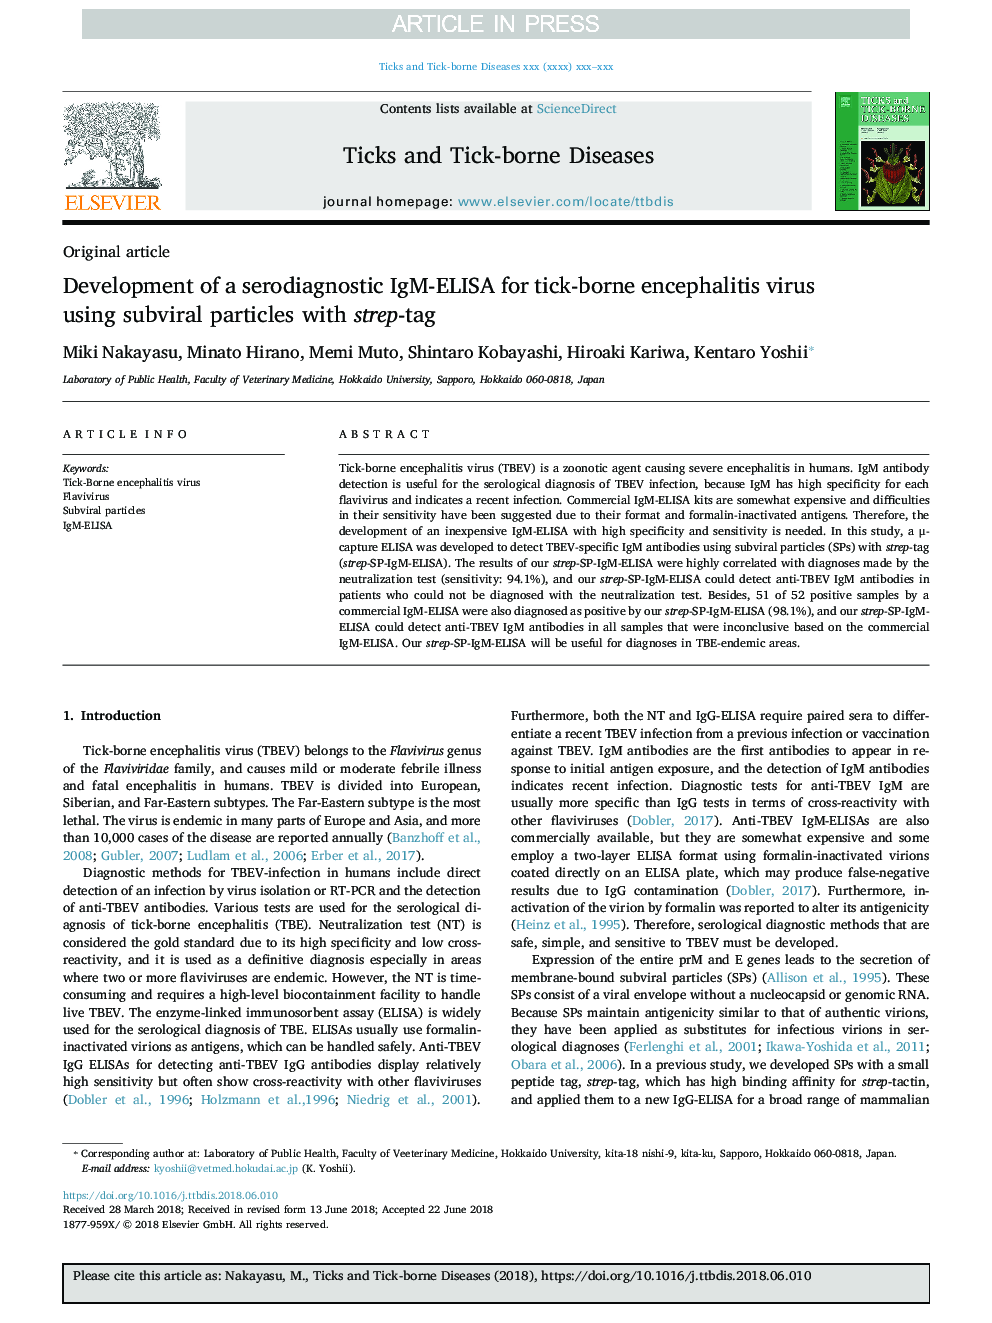 Development of a serodiagnostic IgM-ELISA for tick-borne encephalitis virus using subviral particles with strep-tag